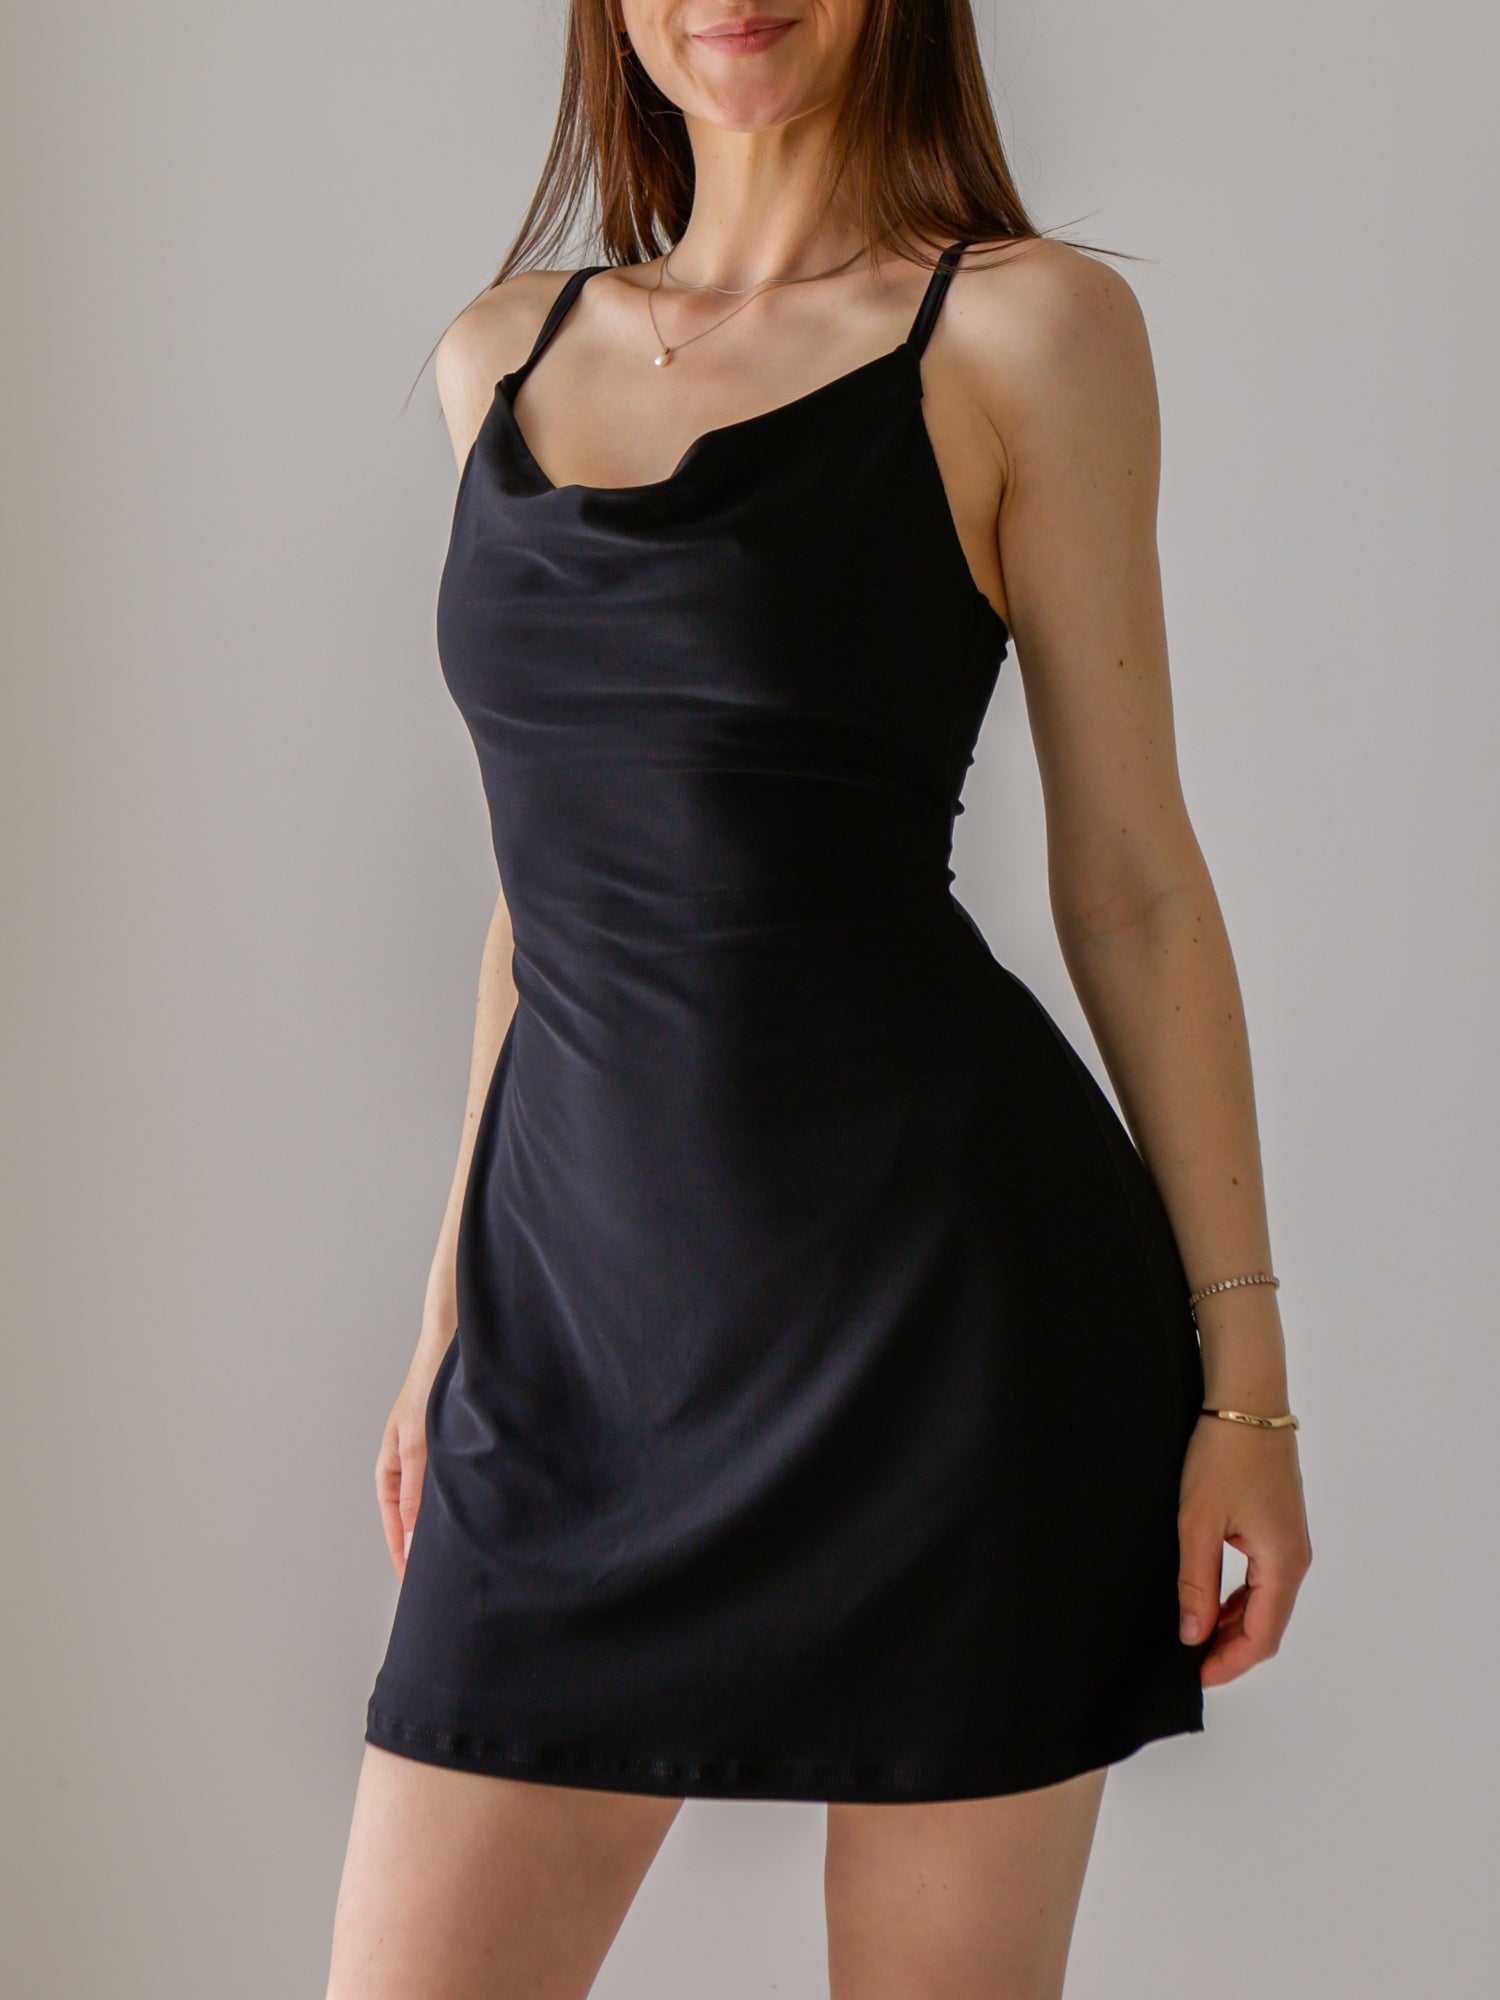 Eden Drape Mini Dress with Built-in-bra